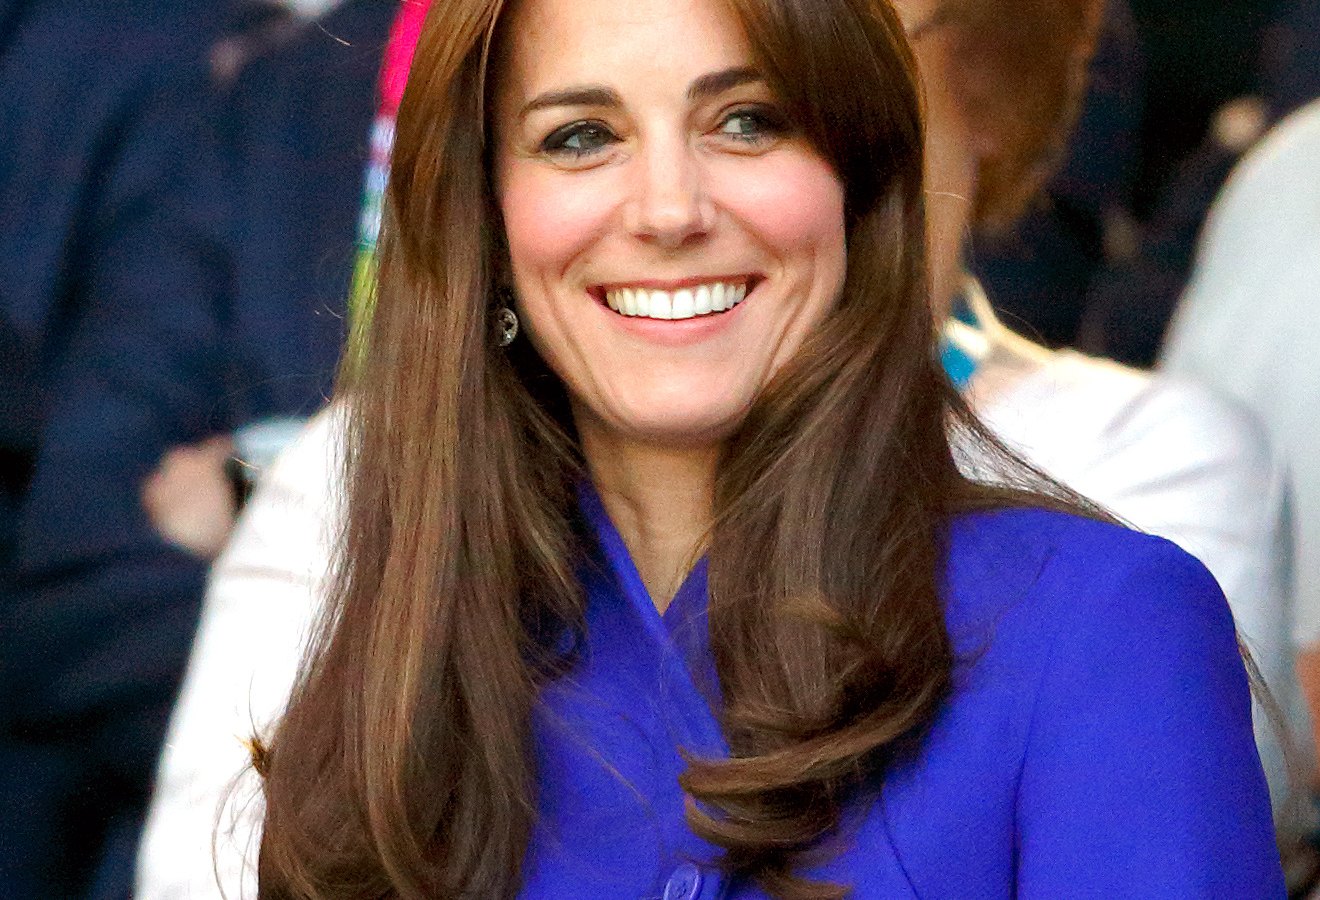 Kate Middleton shows off her new bangs on September 18, 2015.